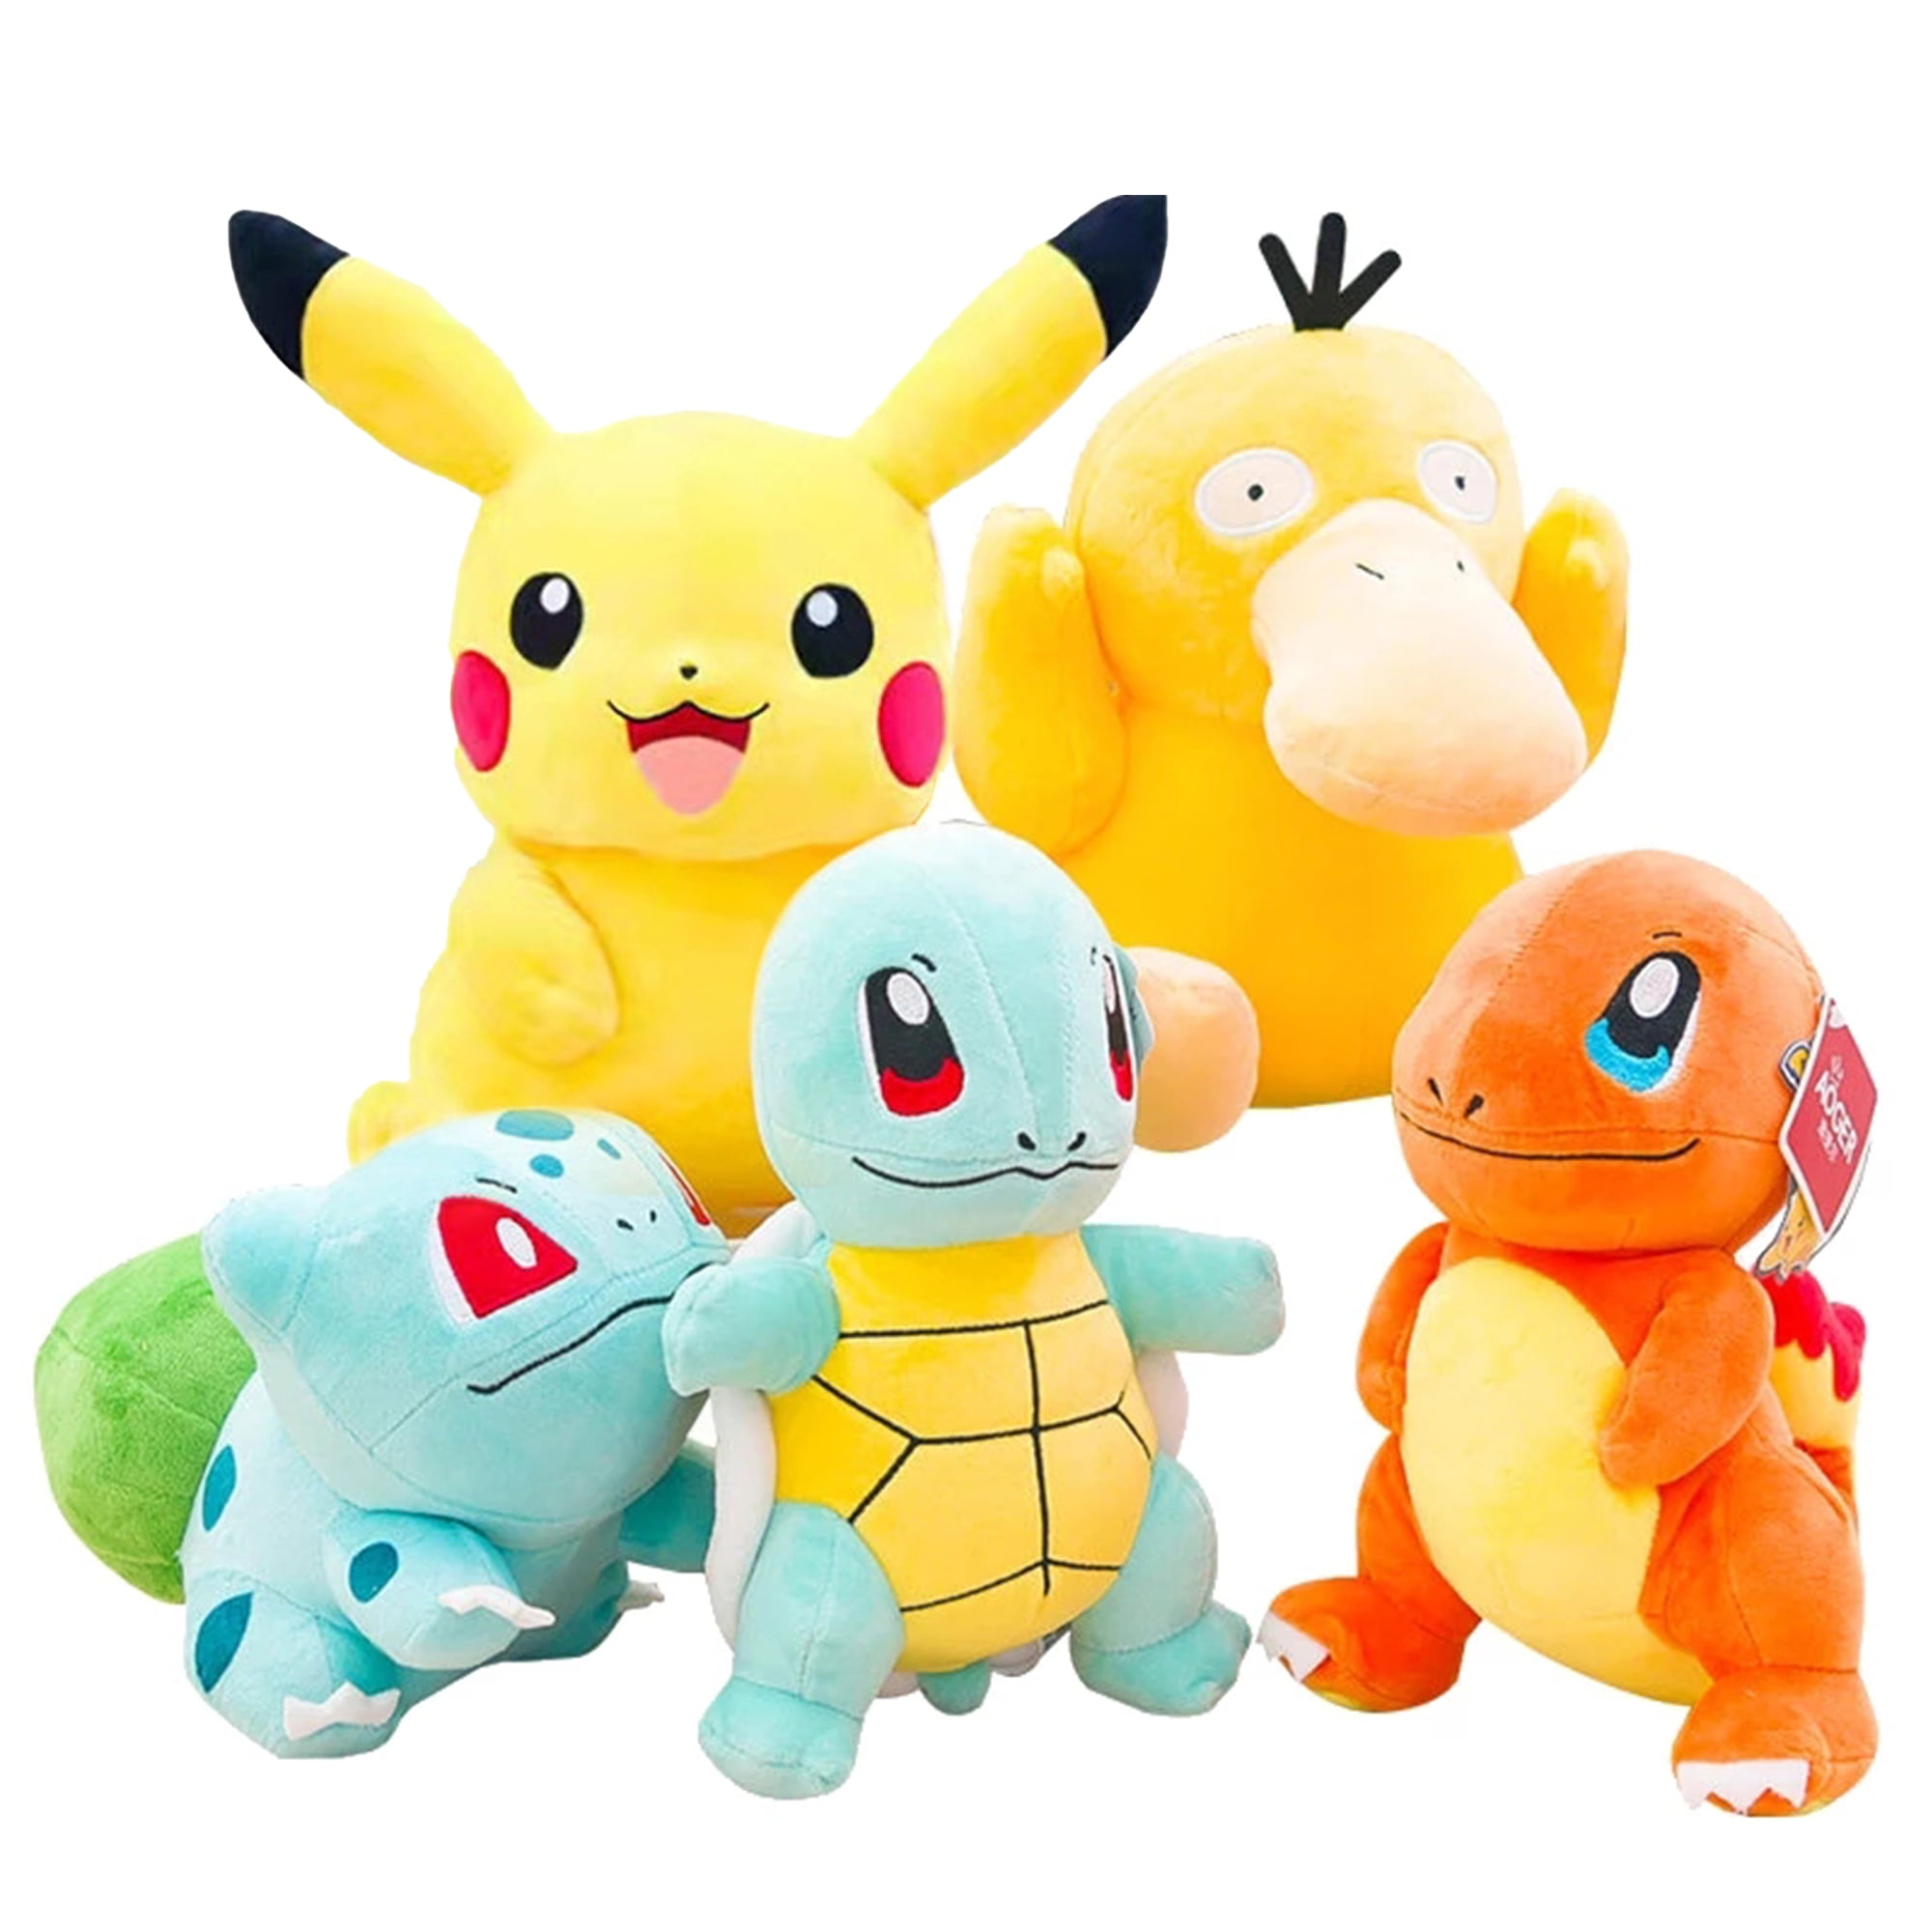 Pikachu Charmander Bulbasar Toys Pokemon Official Kids Plush Teddy Squirtle